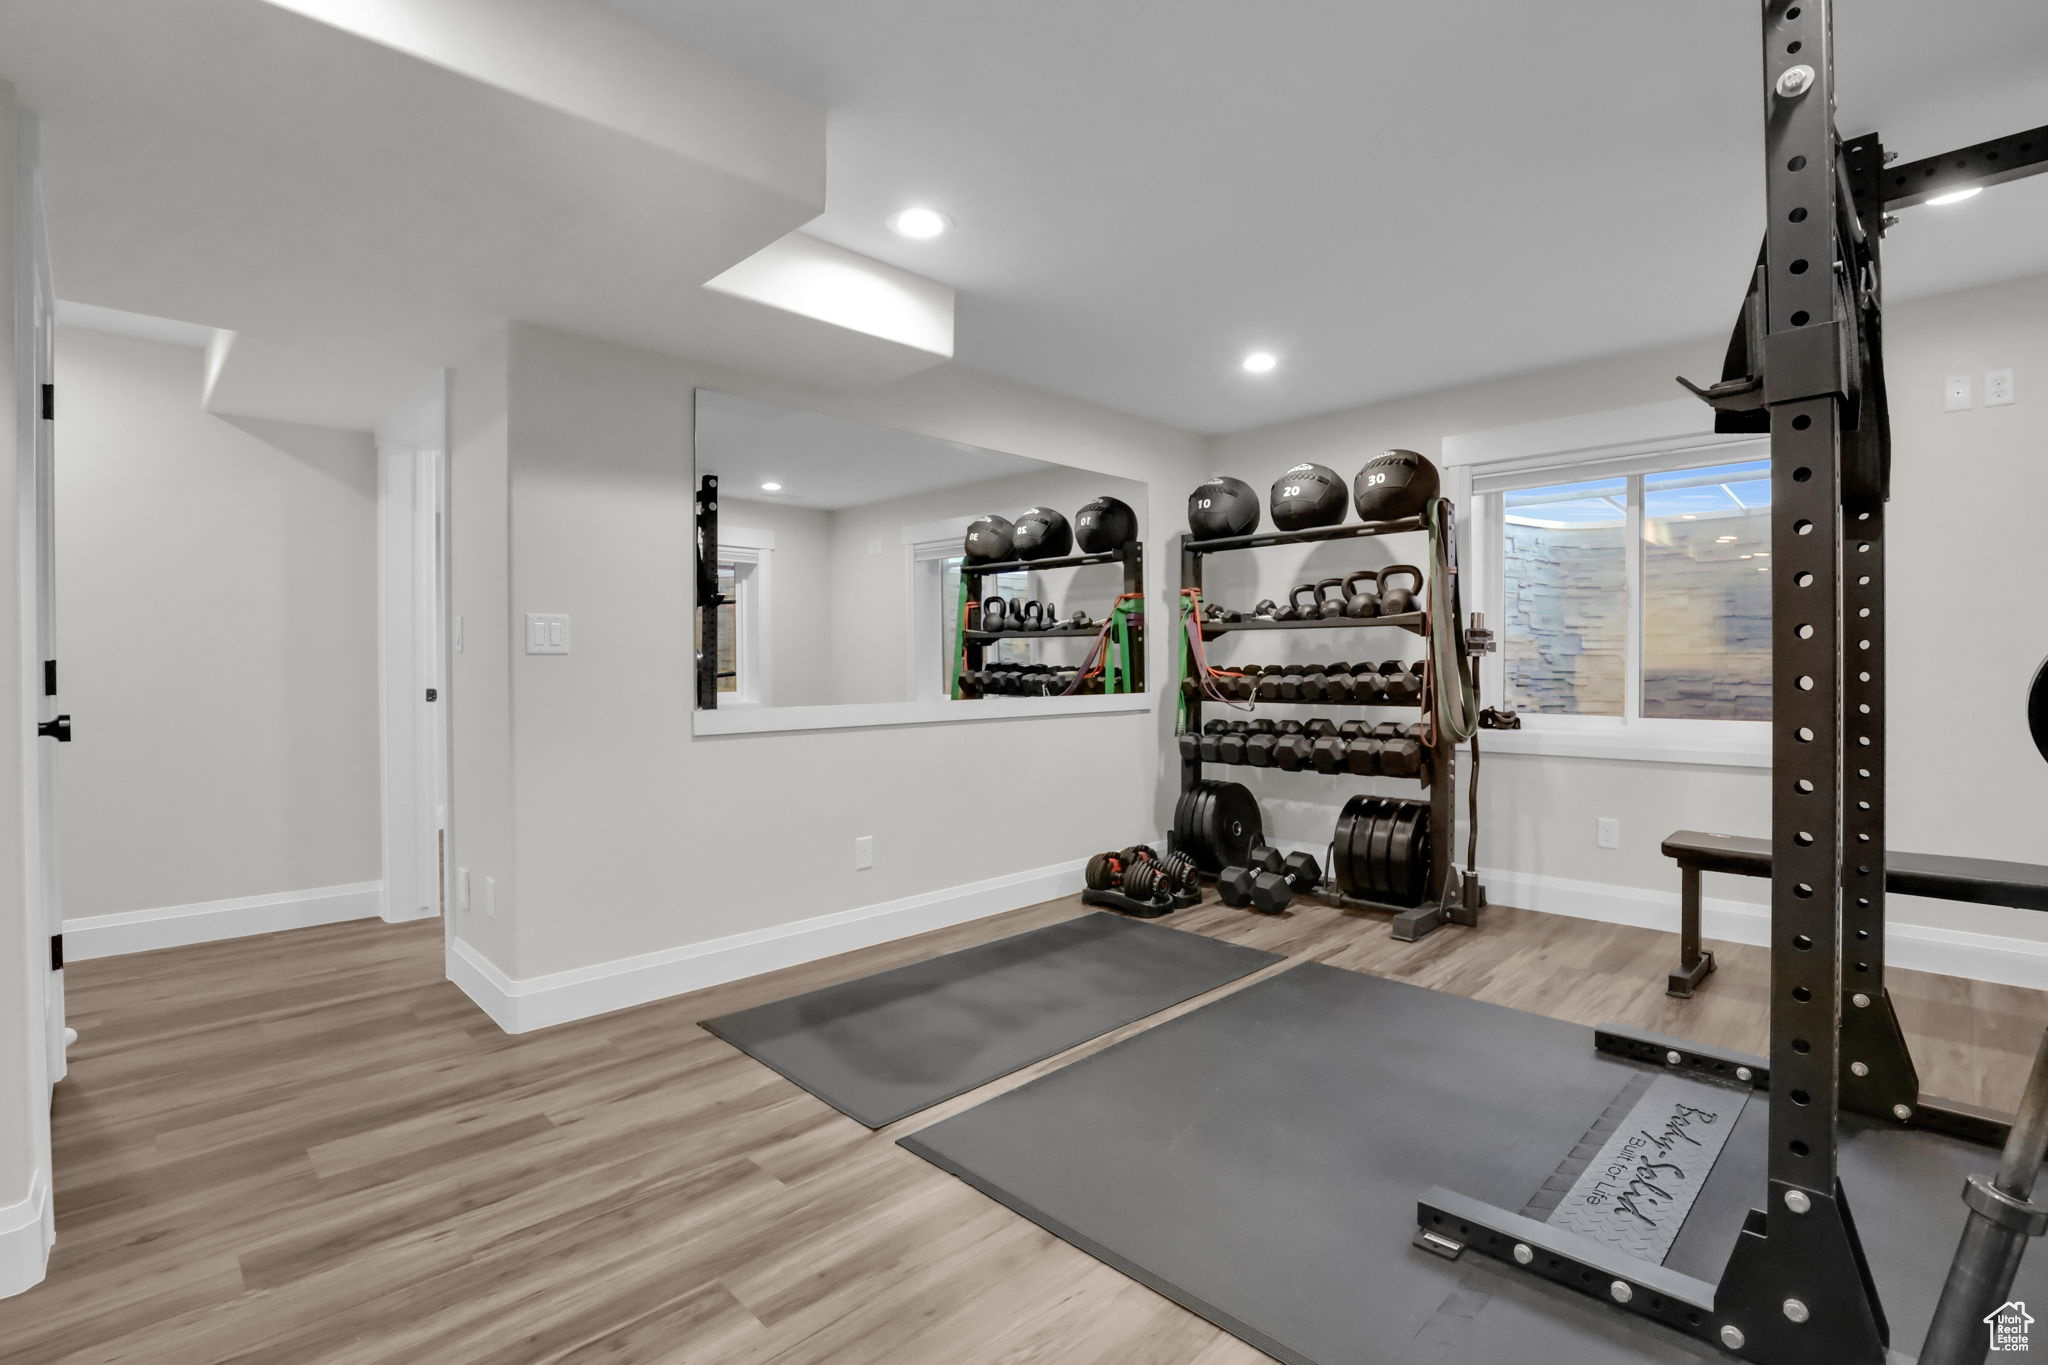 Workout room with light hardwood / wood-style floors